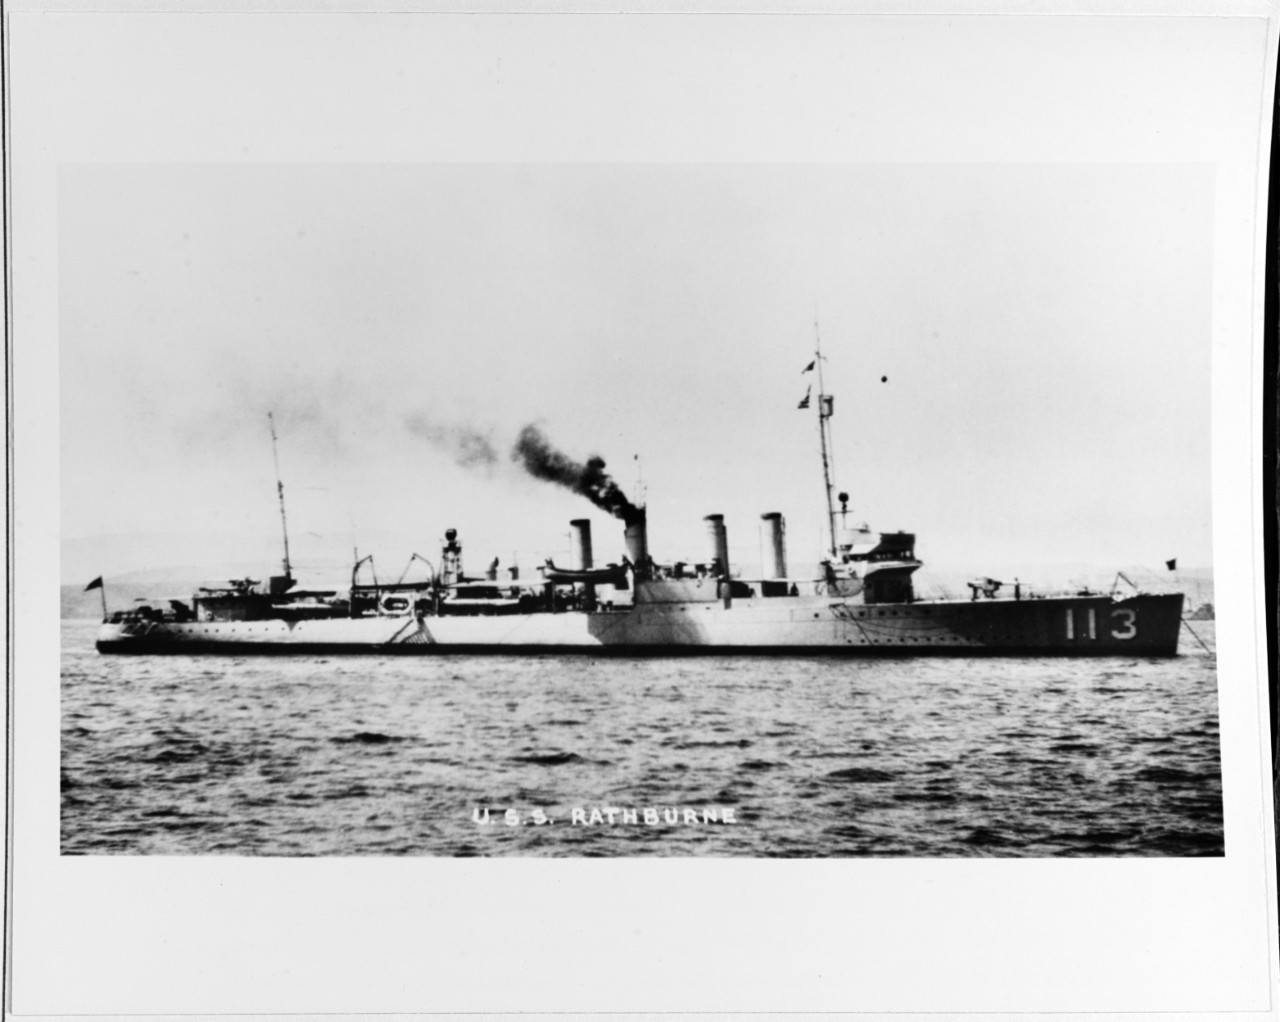 USS RATHBURNE (DD-113)